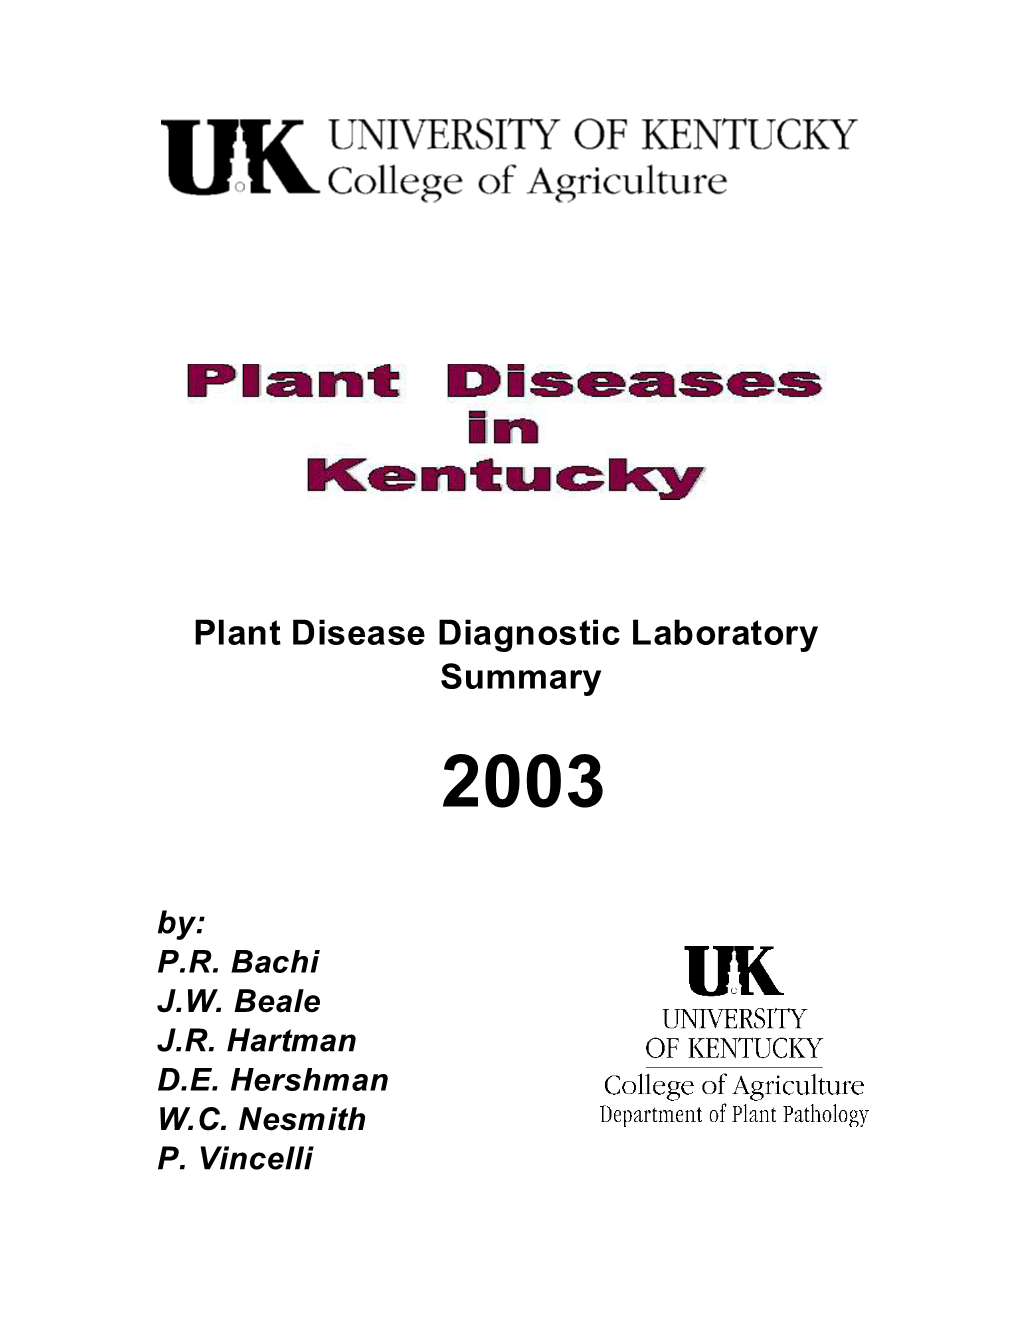 2003 Plant Disease Diagnostic Laboratory Report